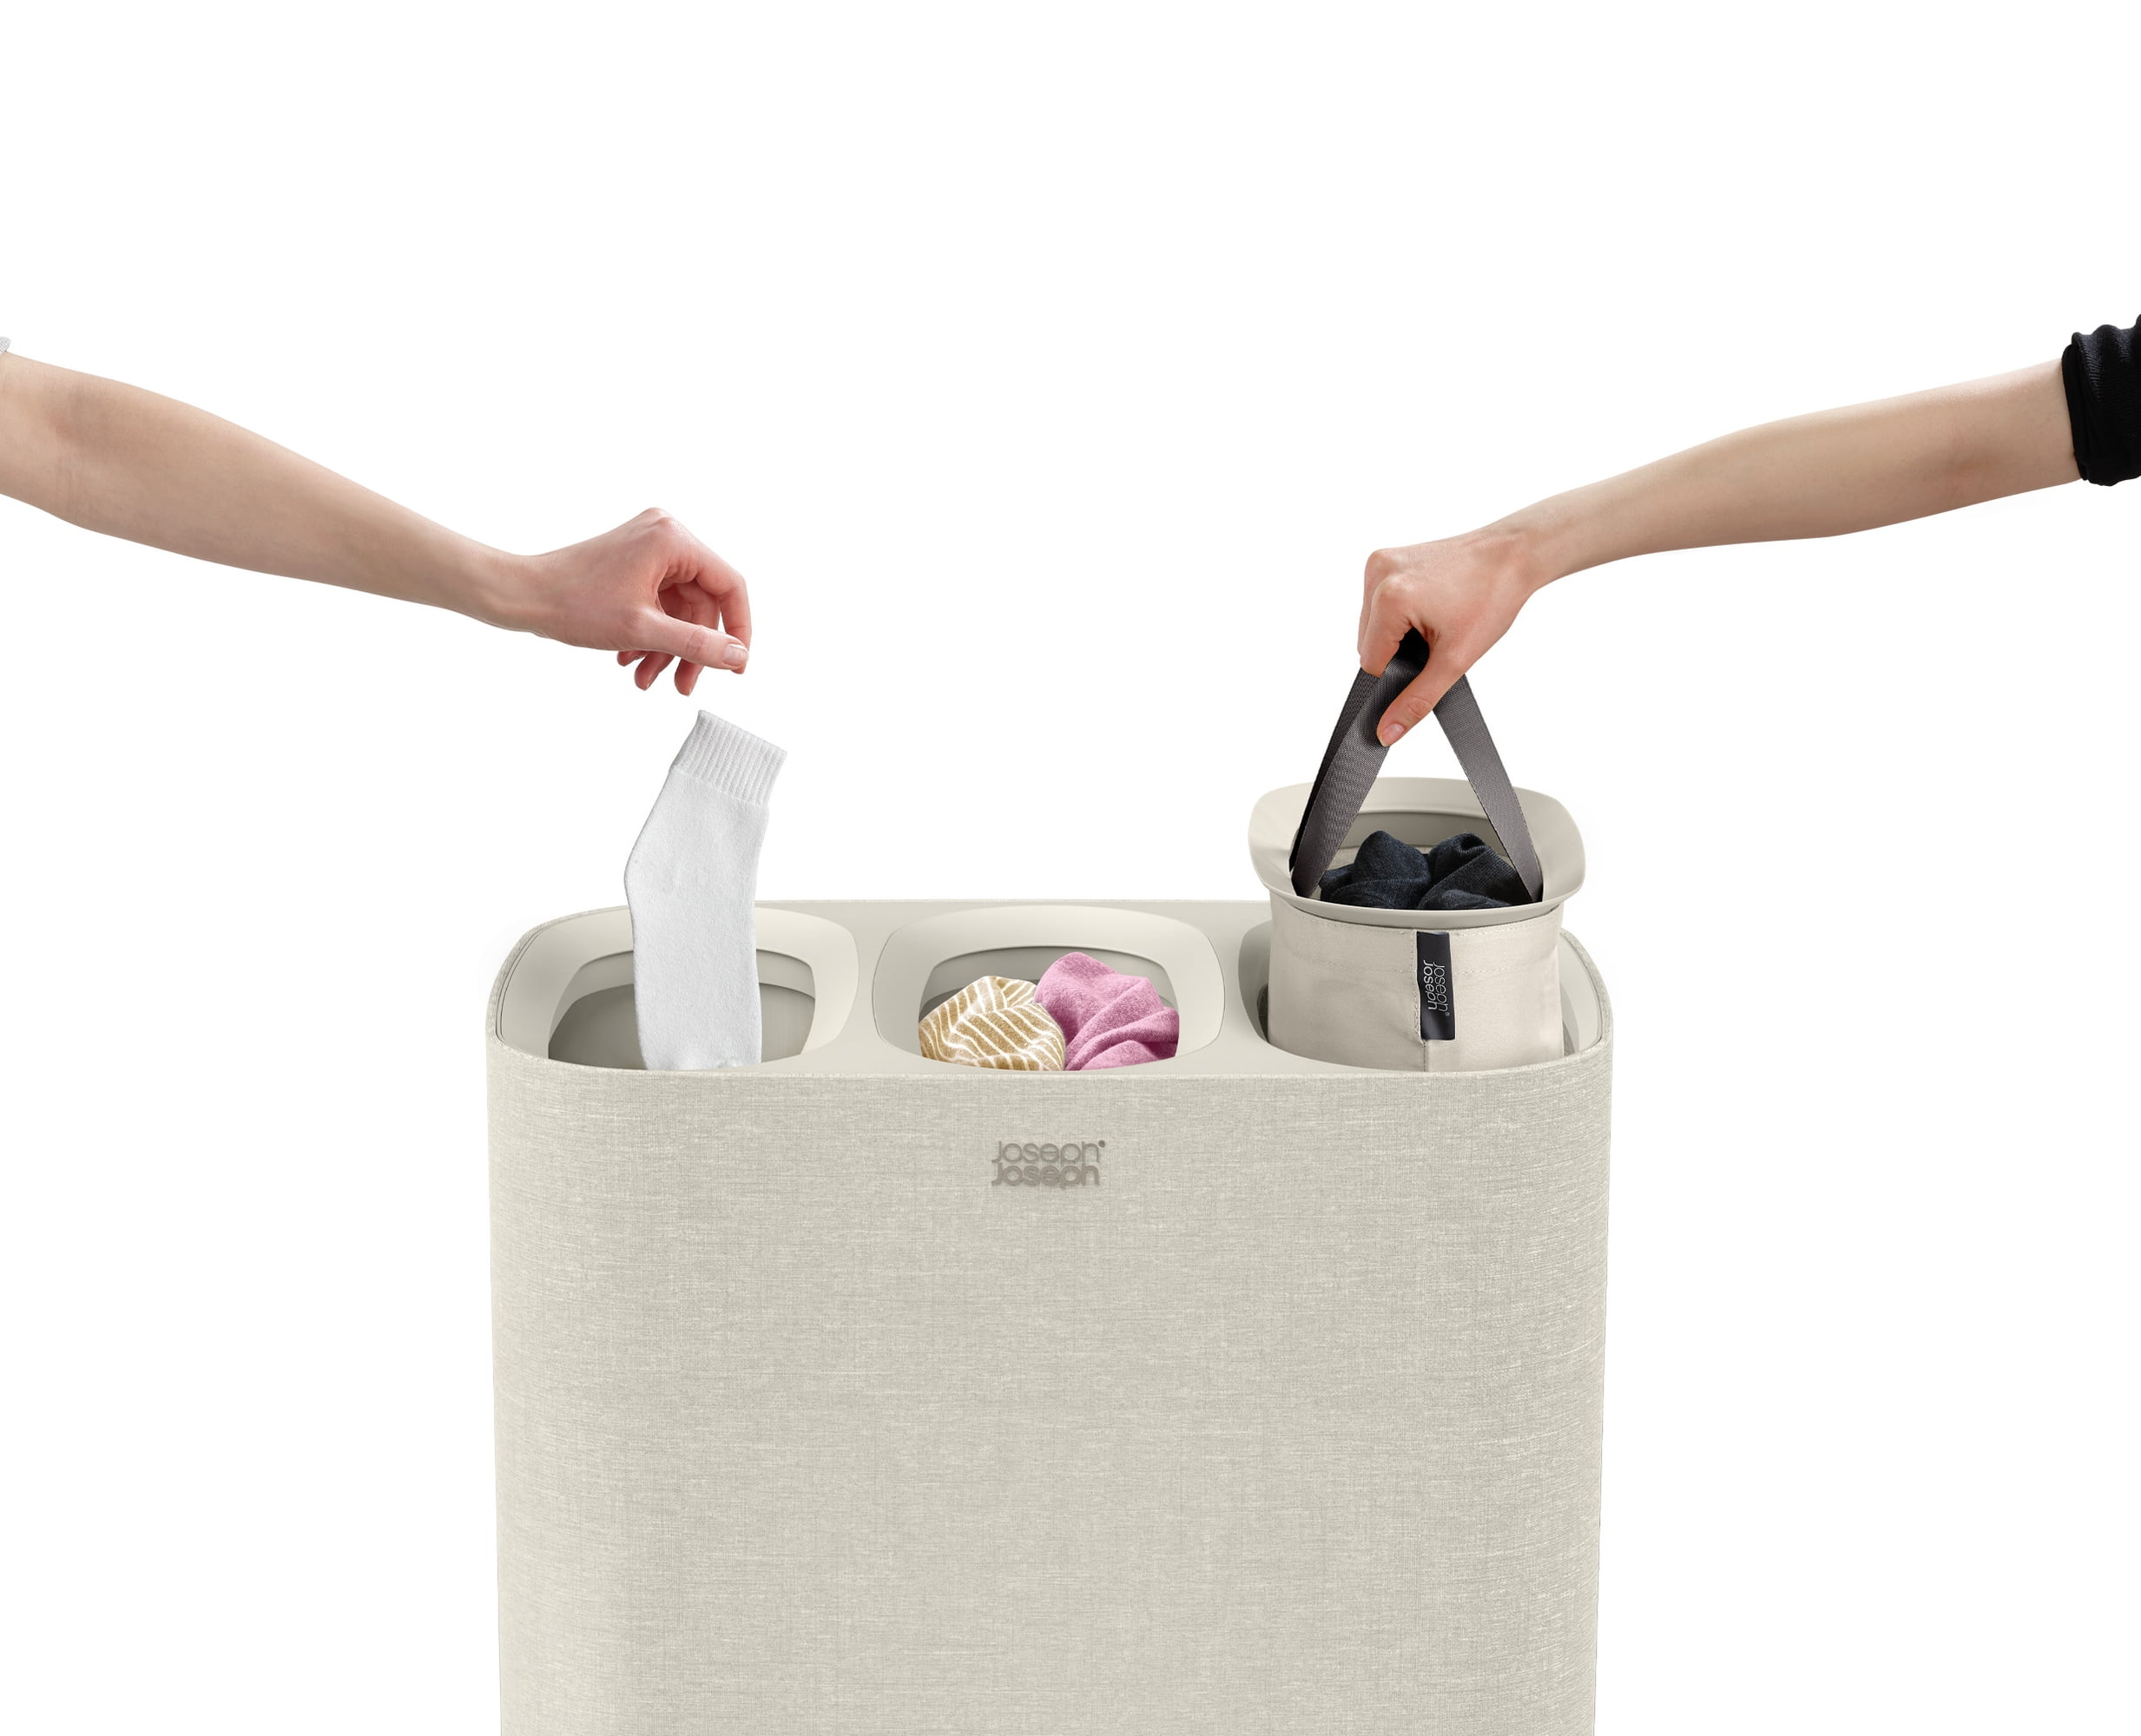  Joseph Joseph Tota - Trio - Cesta separadora de ropa sucia de  90 litros con tapa, 3 bolsas de lavado extraíbles con asas, color crudo y  plegable que ahorra espacio, tabla